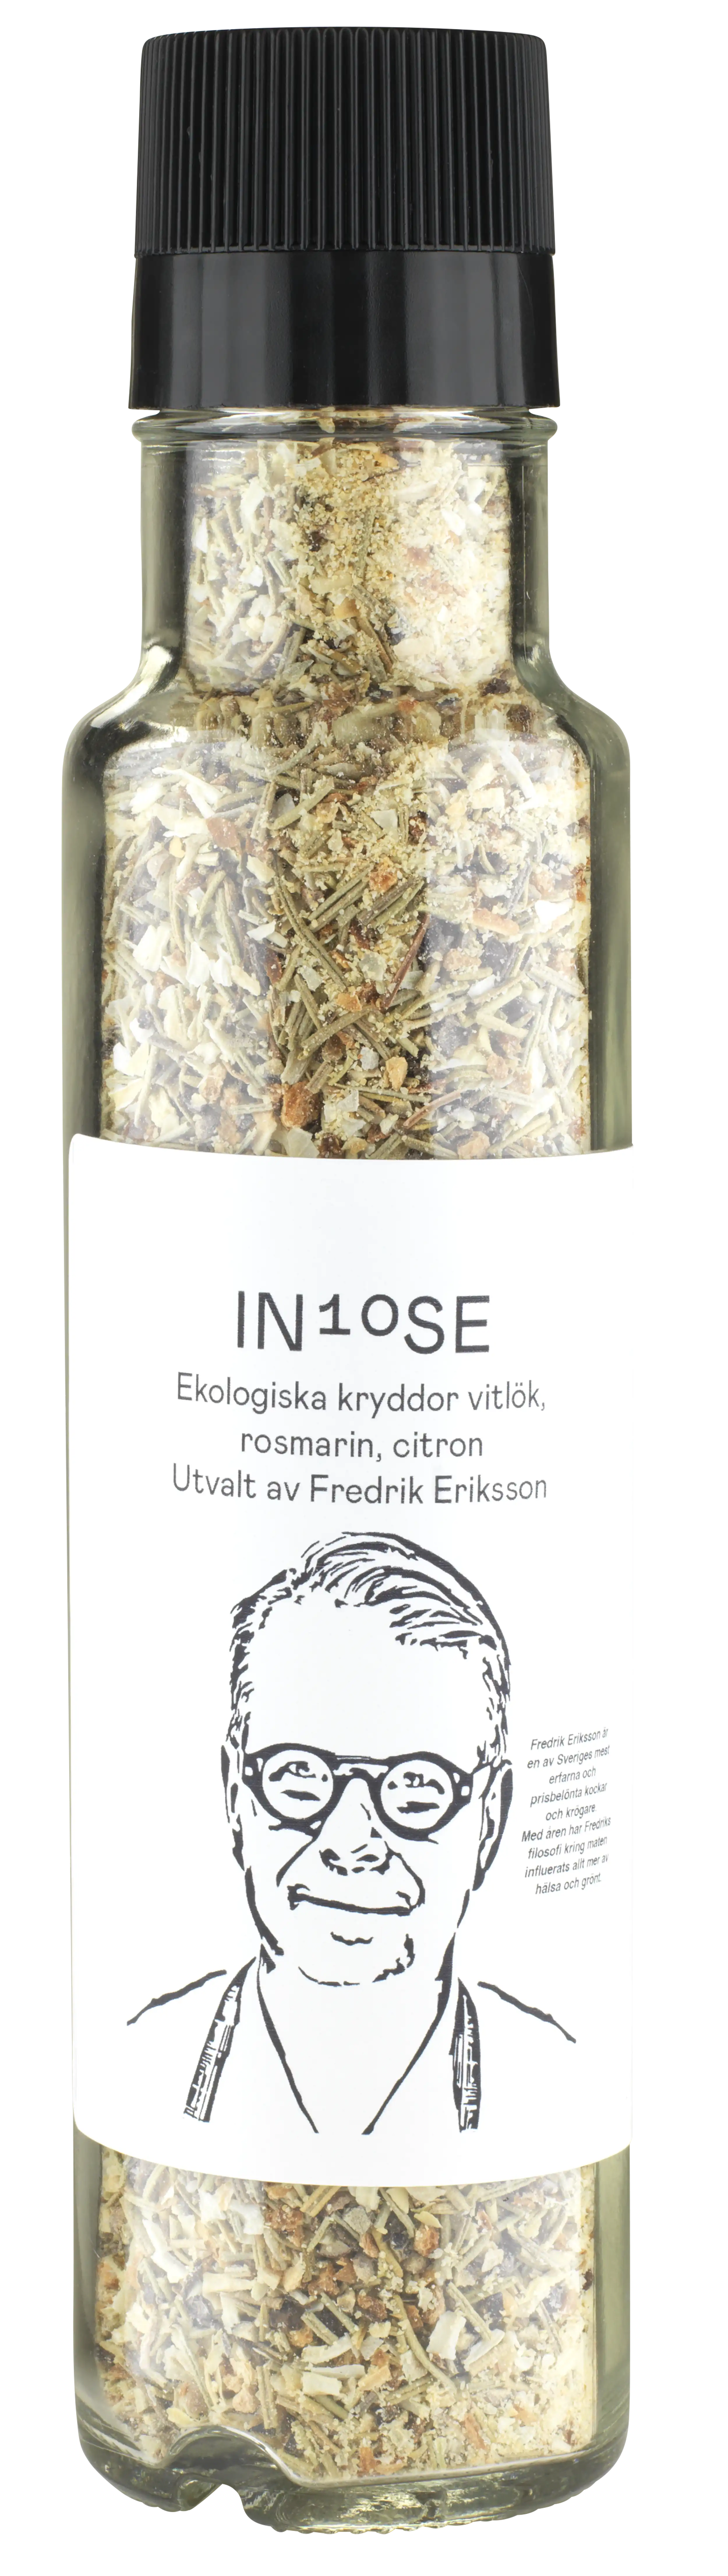 FREDRIK ERIKSSON Ekologiska kryddor Vitlök, Rosmarin, Citron